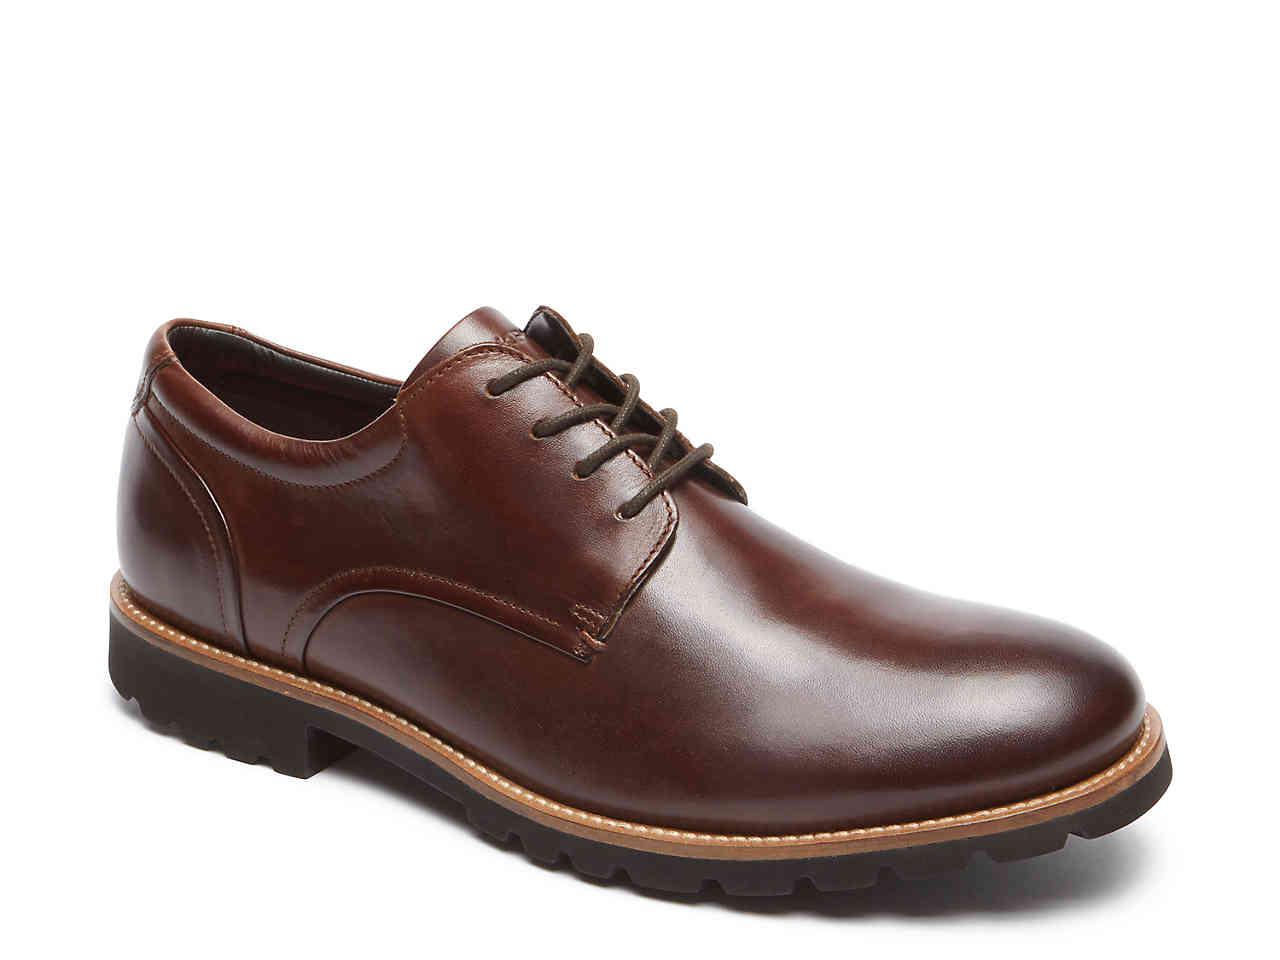 Rockport Leather Colben Oxford in Dark Brown (Brown) for Men - Lyst